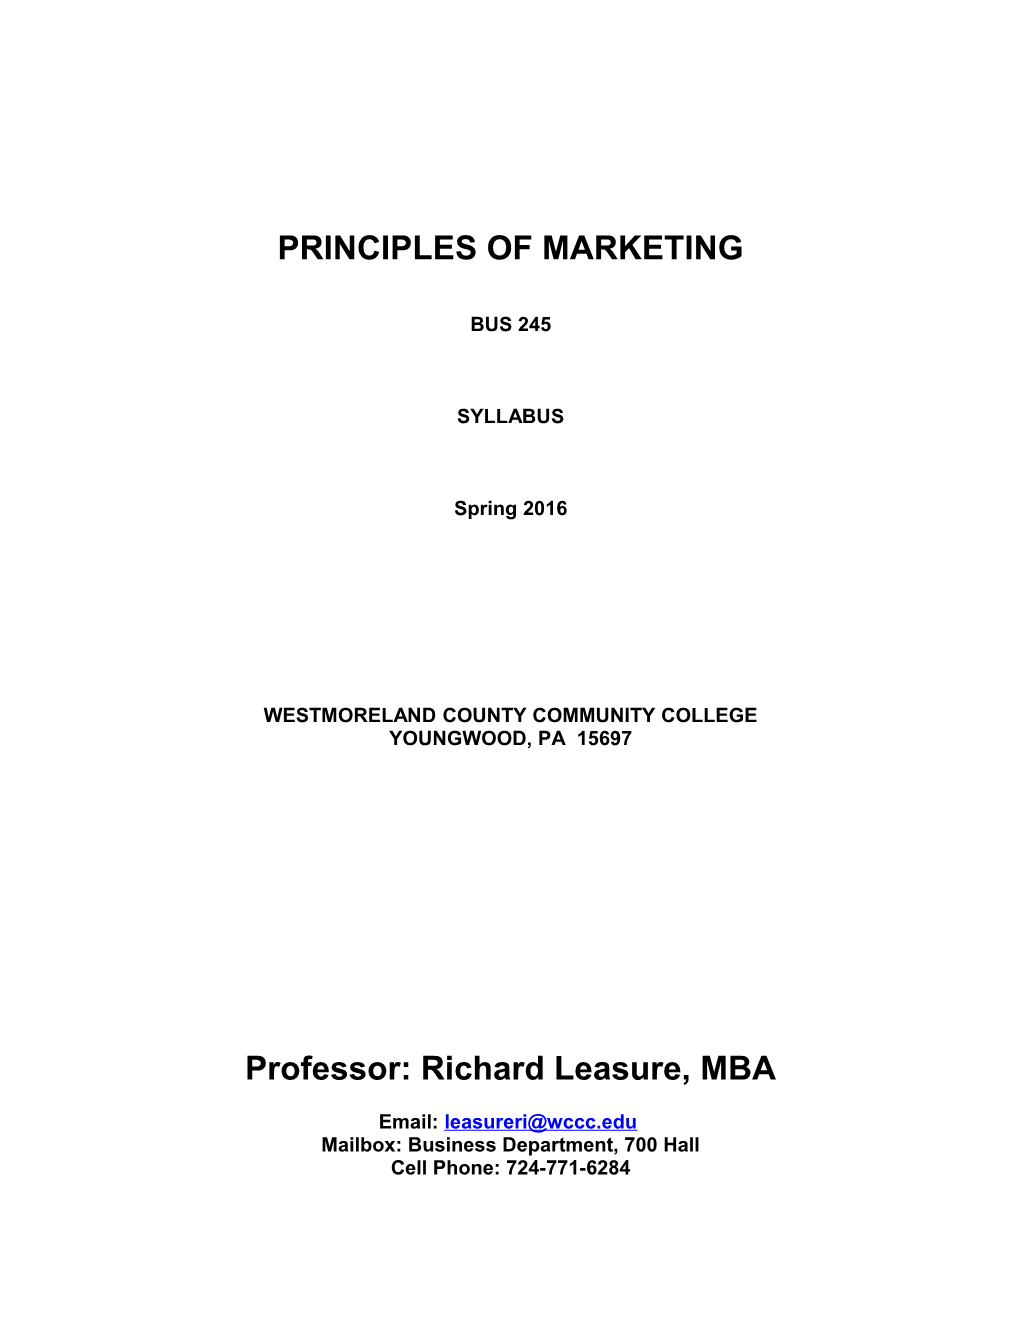 Professor: Richard Leasure, MBA